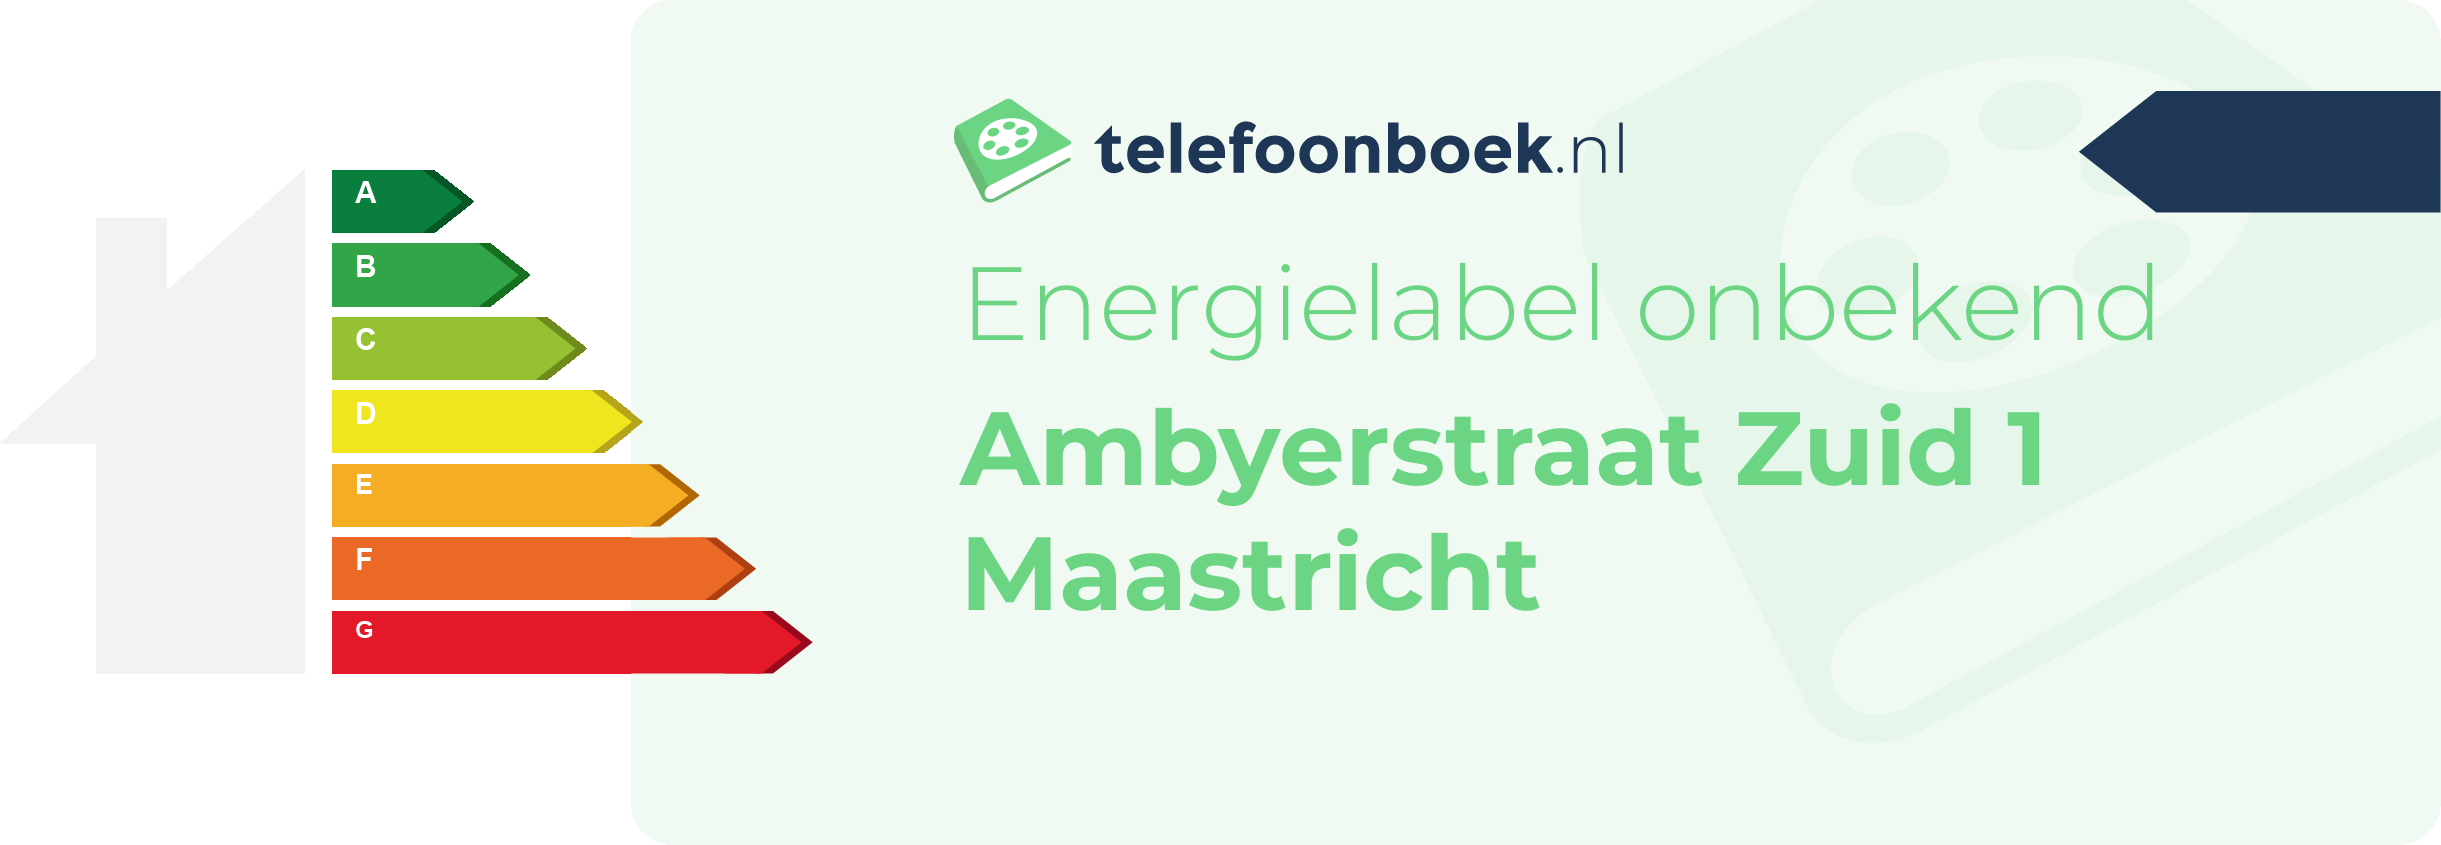 Energielabel Ambyerstraat Zuid 1 Maastricht